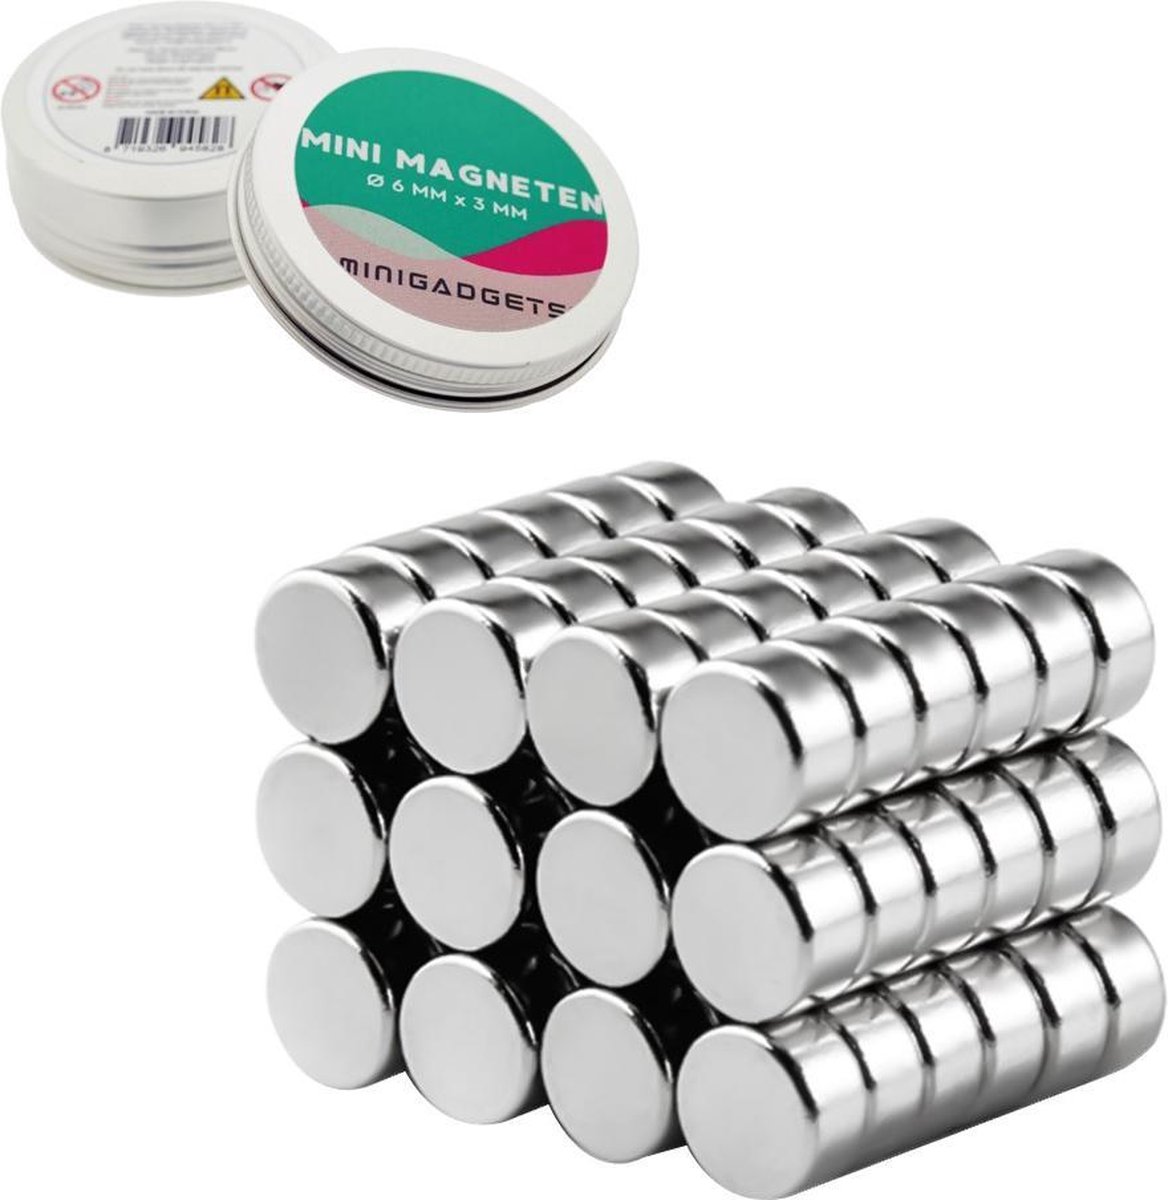 Super sterke magneten - 6 x 3 mm (50-stuks) - Rond - Neodymium - Koelkast magneten - Whiteboard magneten - Klein - Ronde - 6x3mm